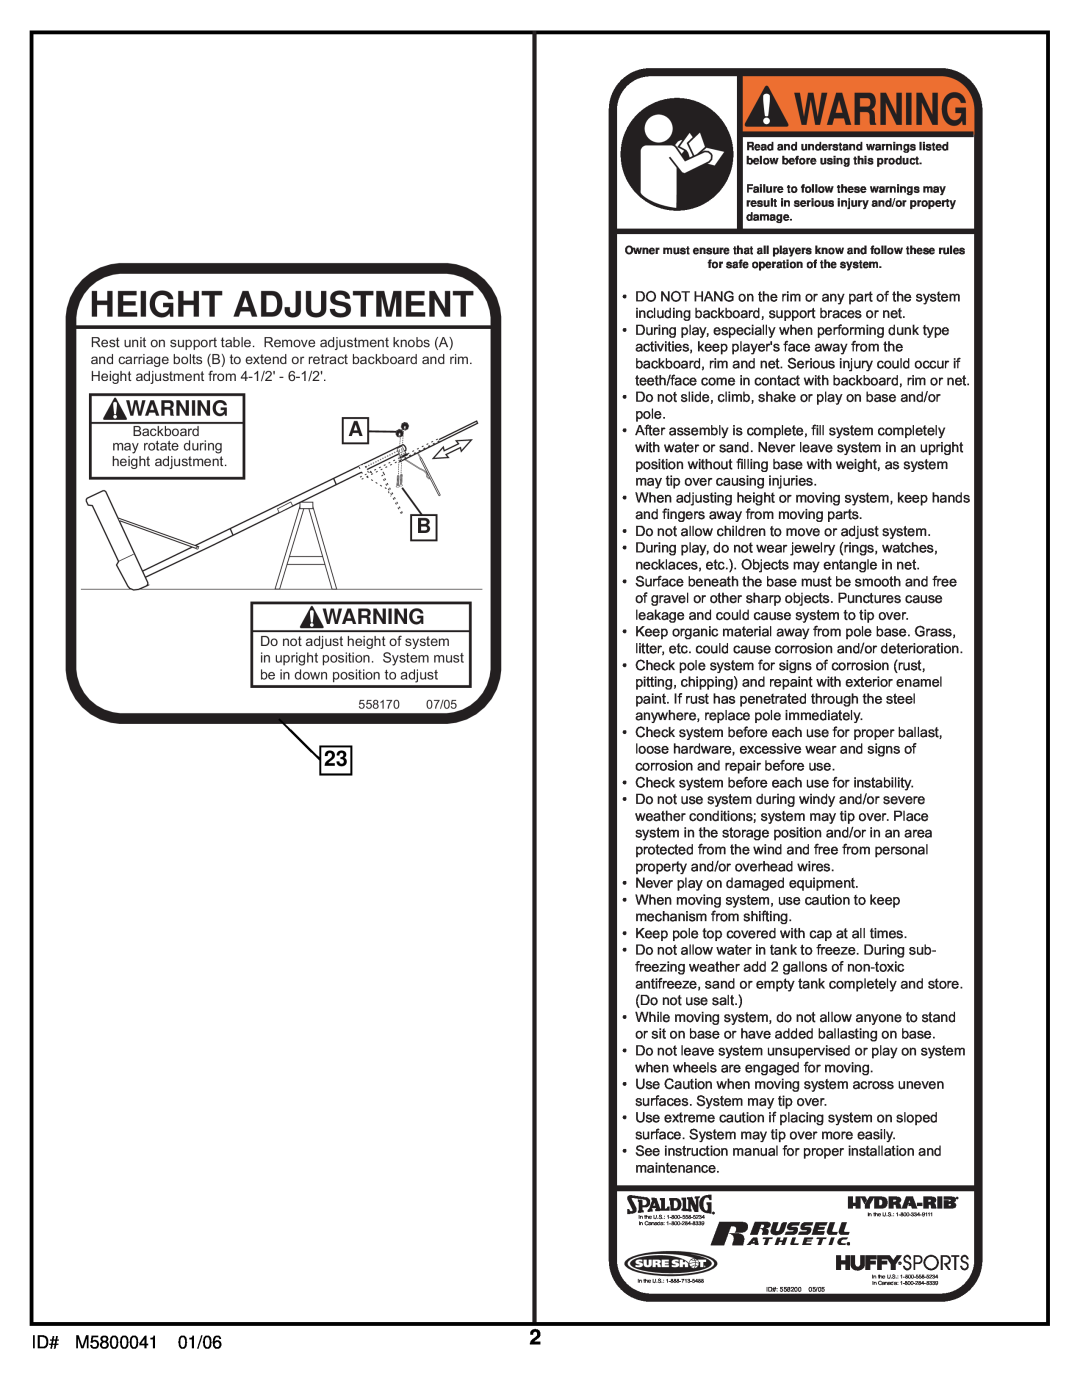 Spalding M5800041 manual Height Adjustment 